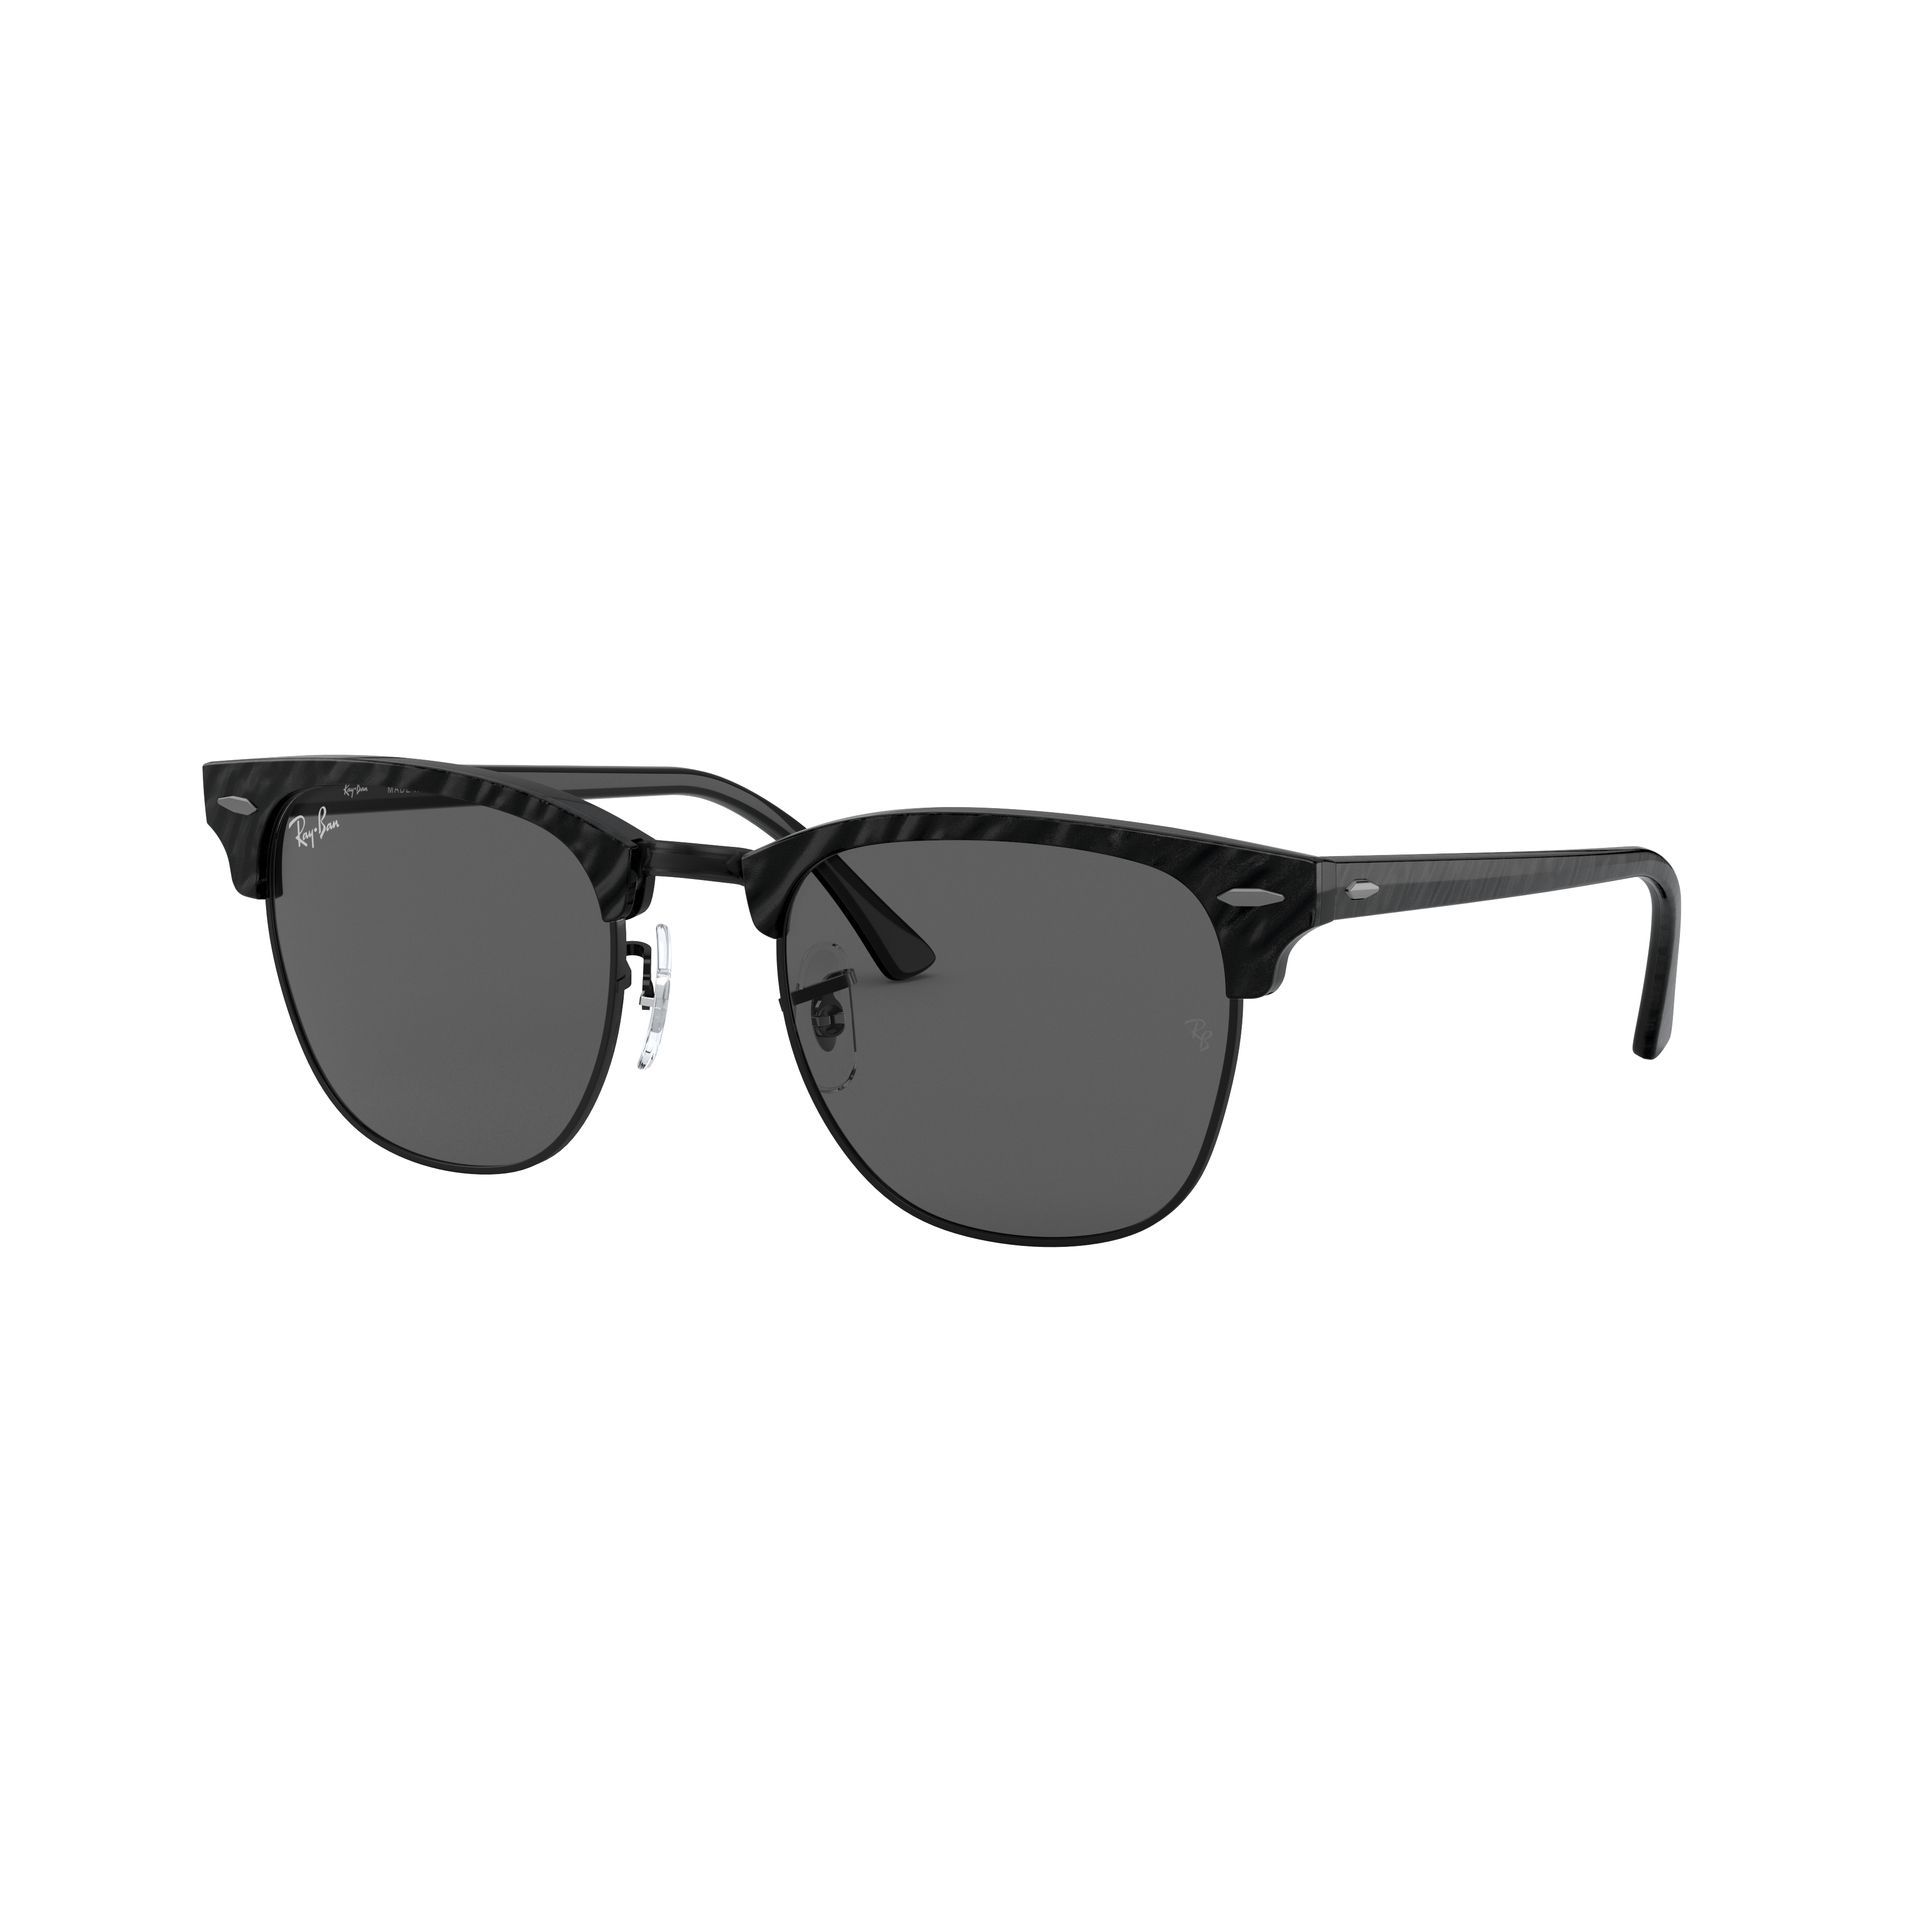 0RB3016 Square Sunglasses 1305B1 - size 51